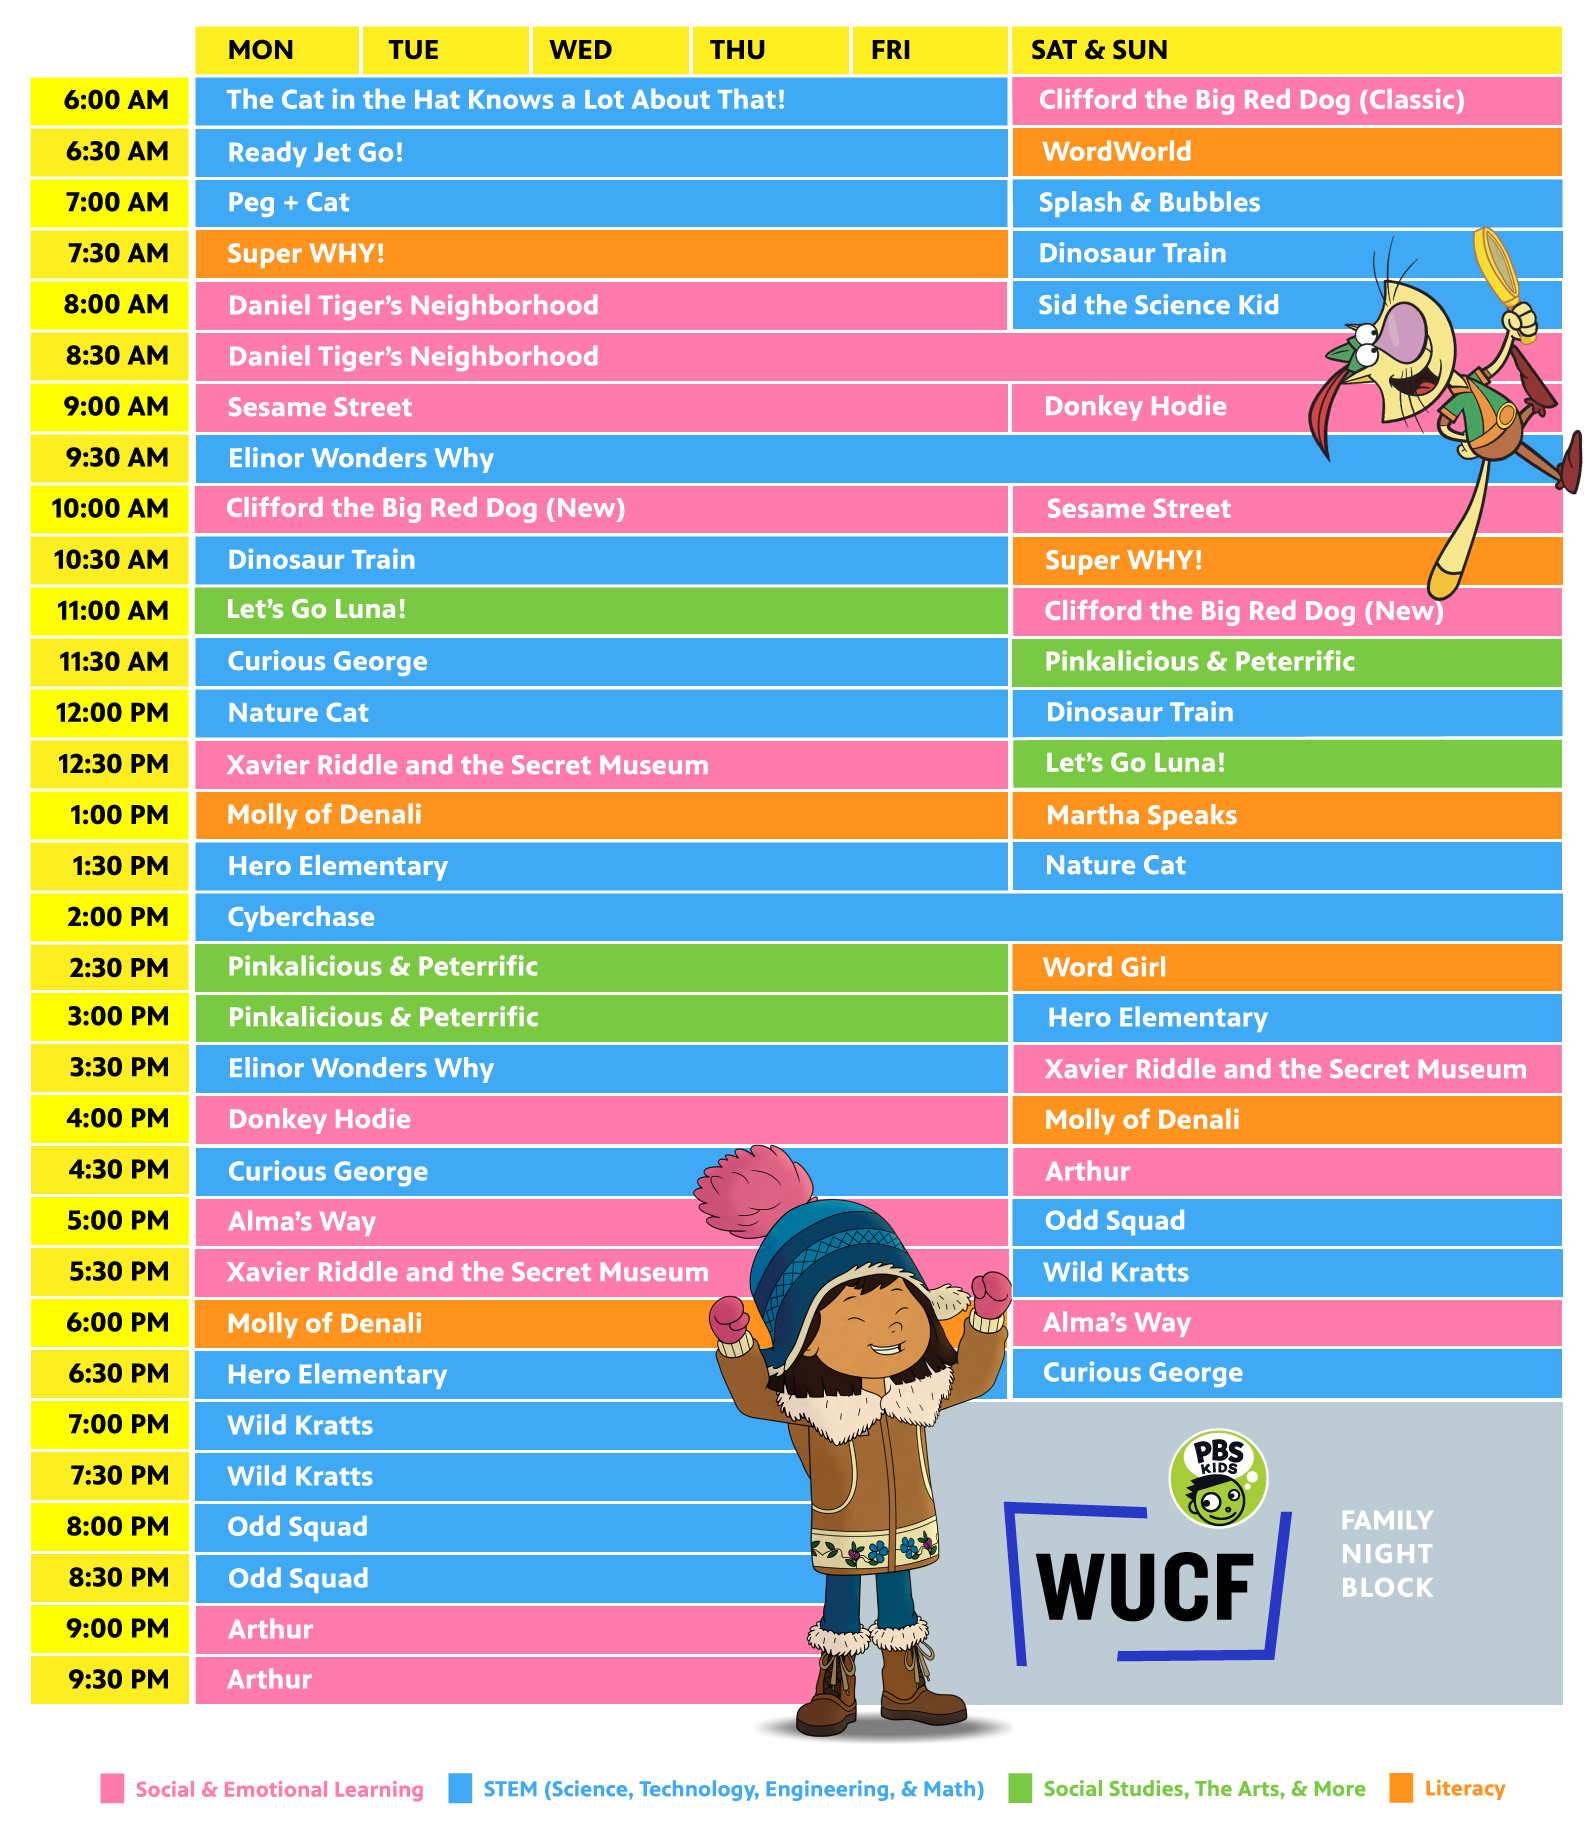 WUCF 24/7 Kids Scheduled 2019